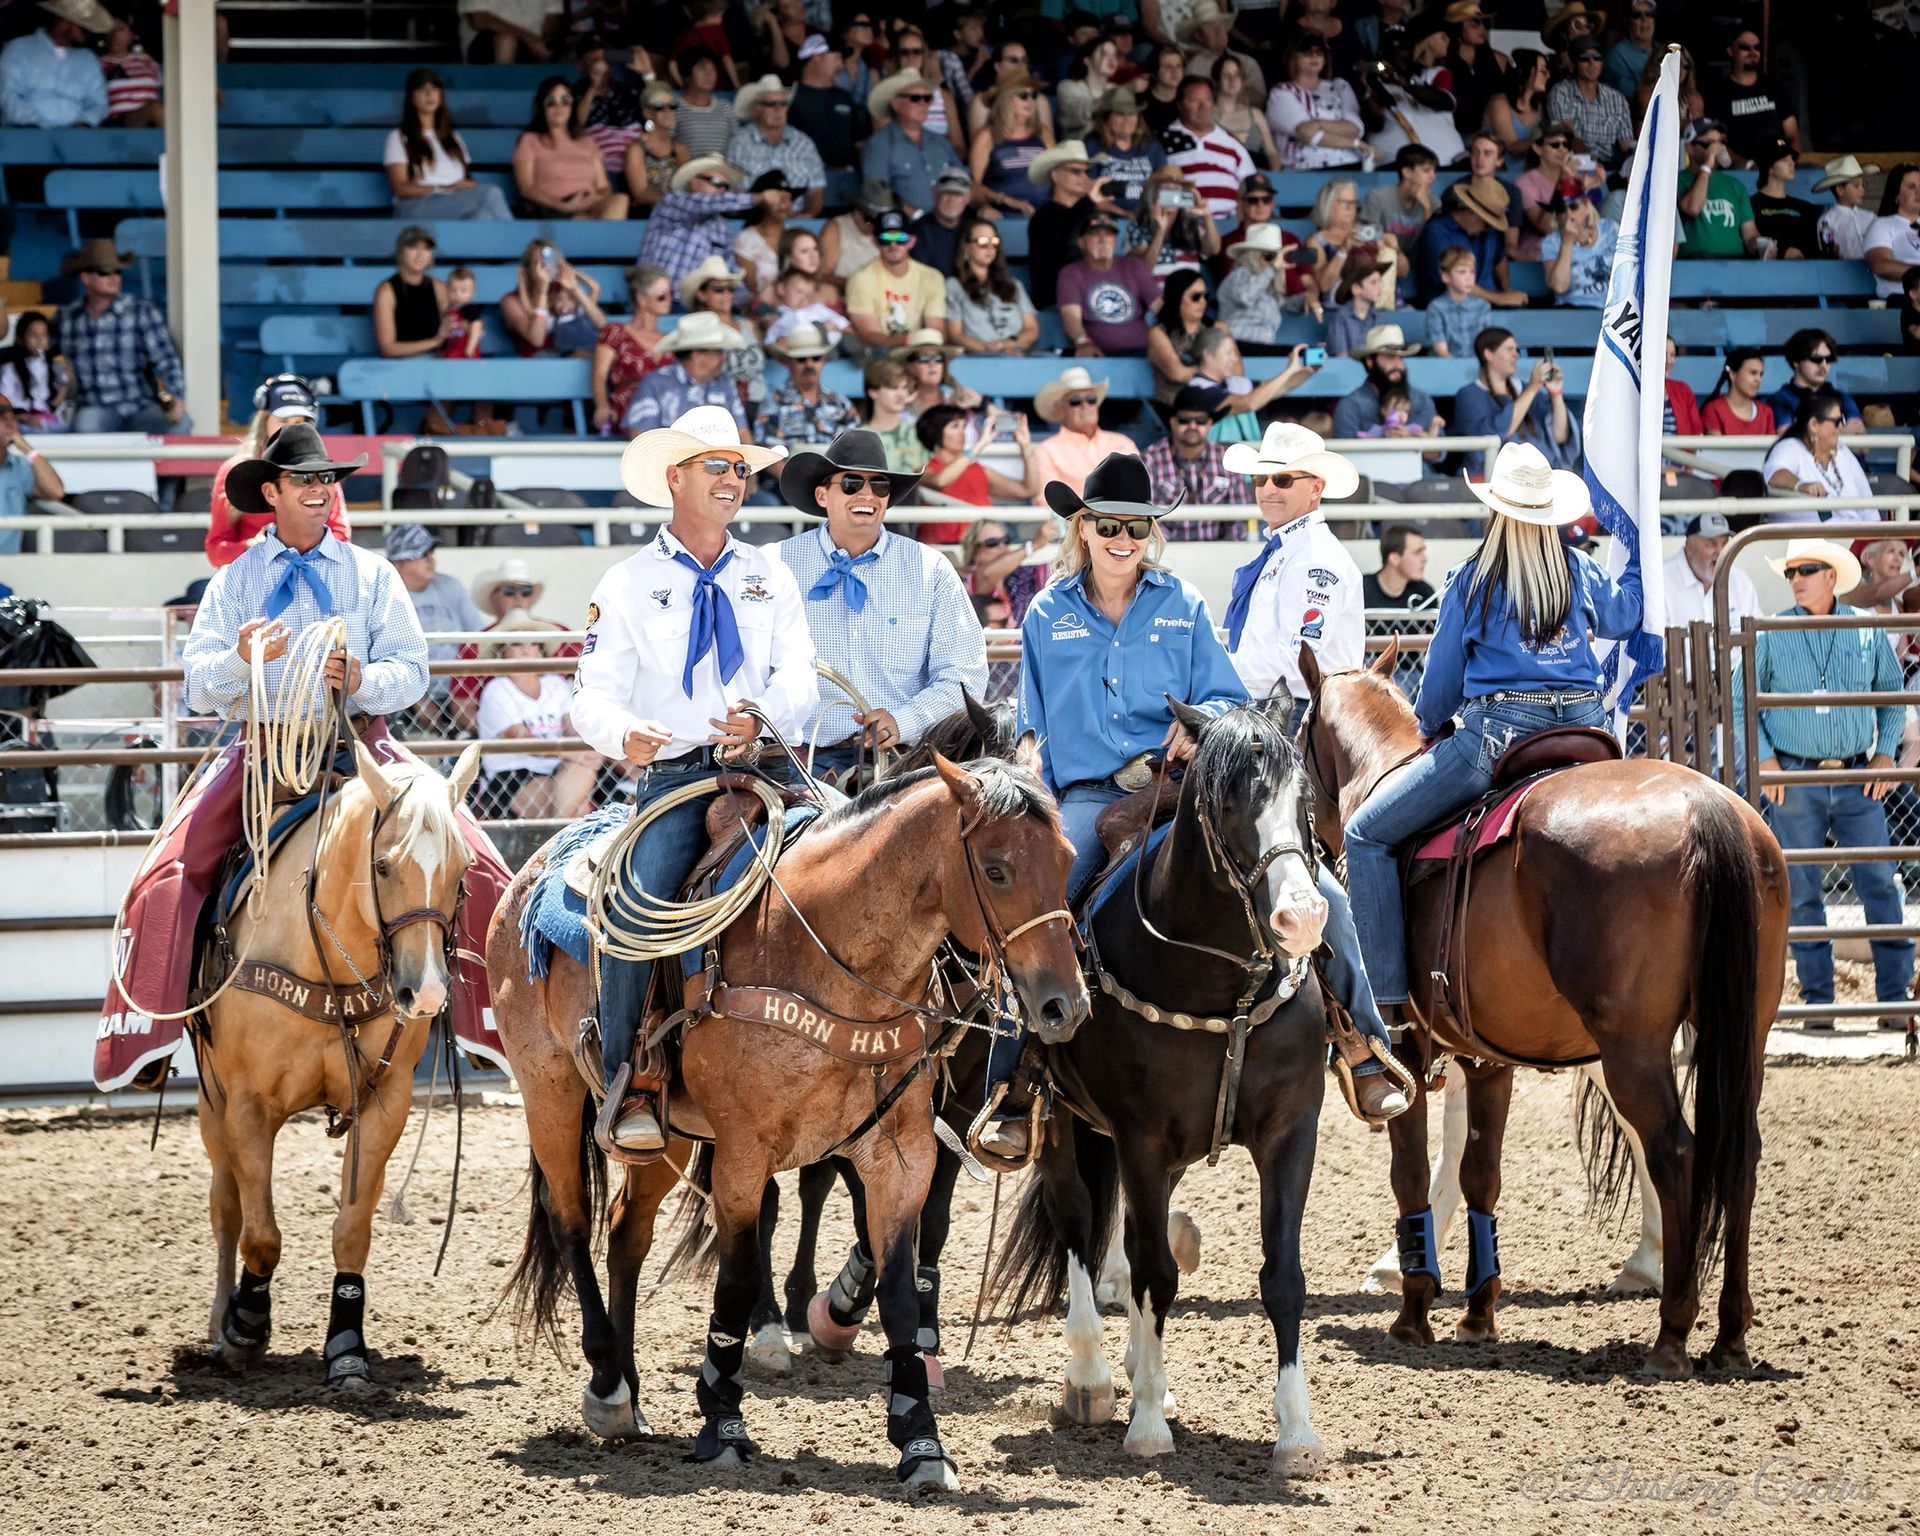 
World's Oldest Rodeo: world record in Prescott, Arizona